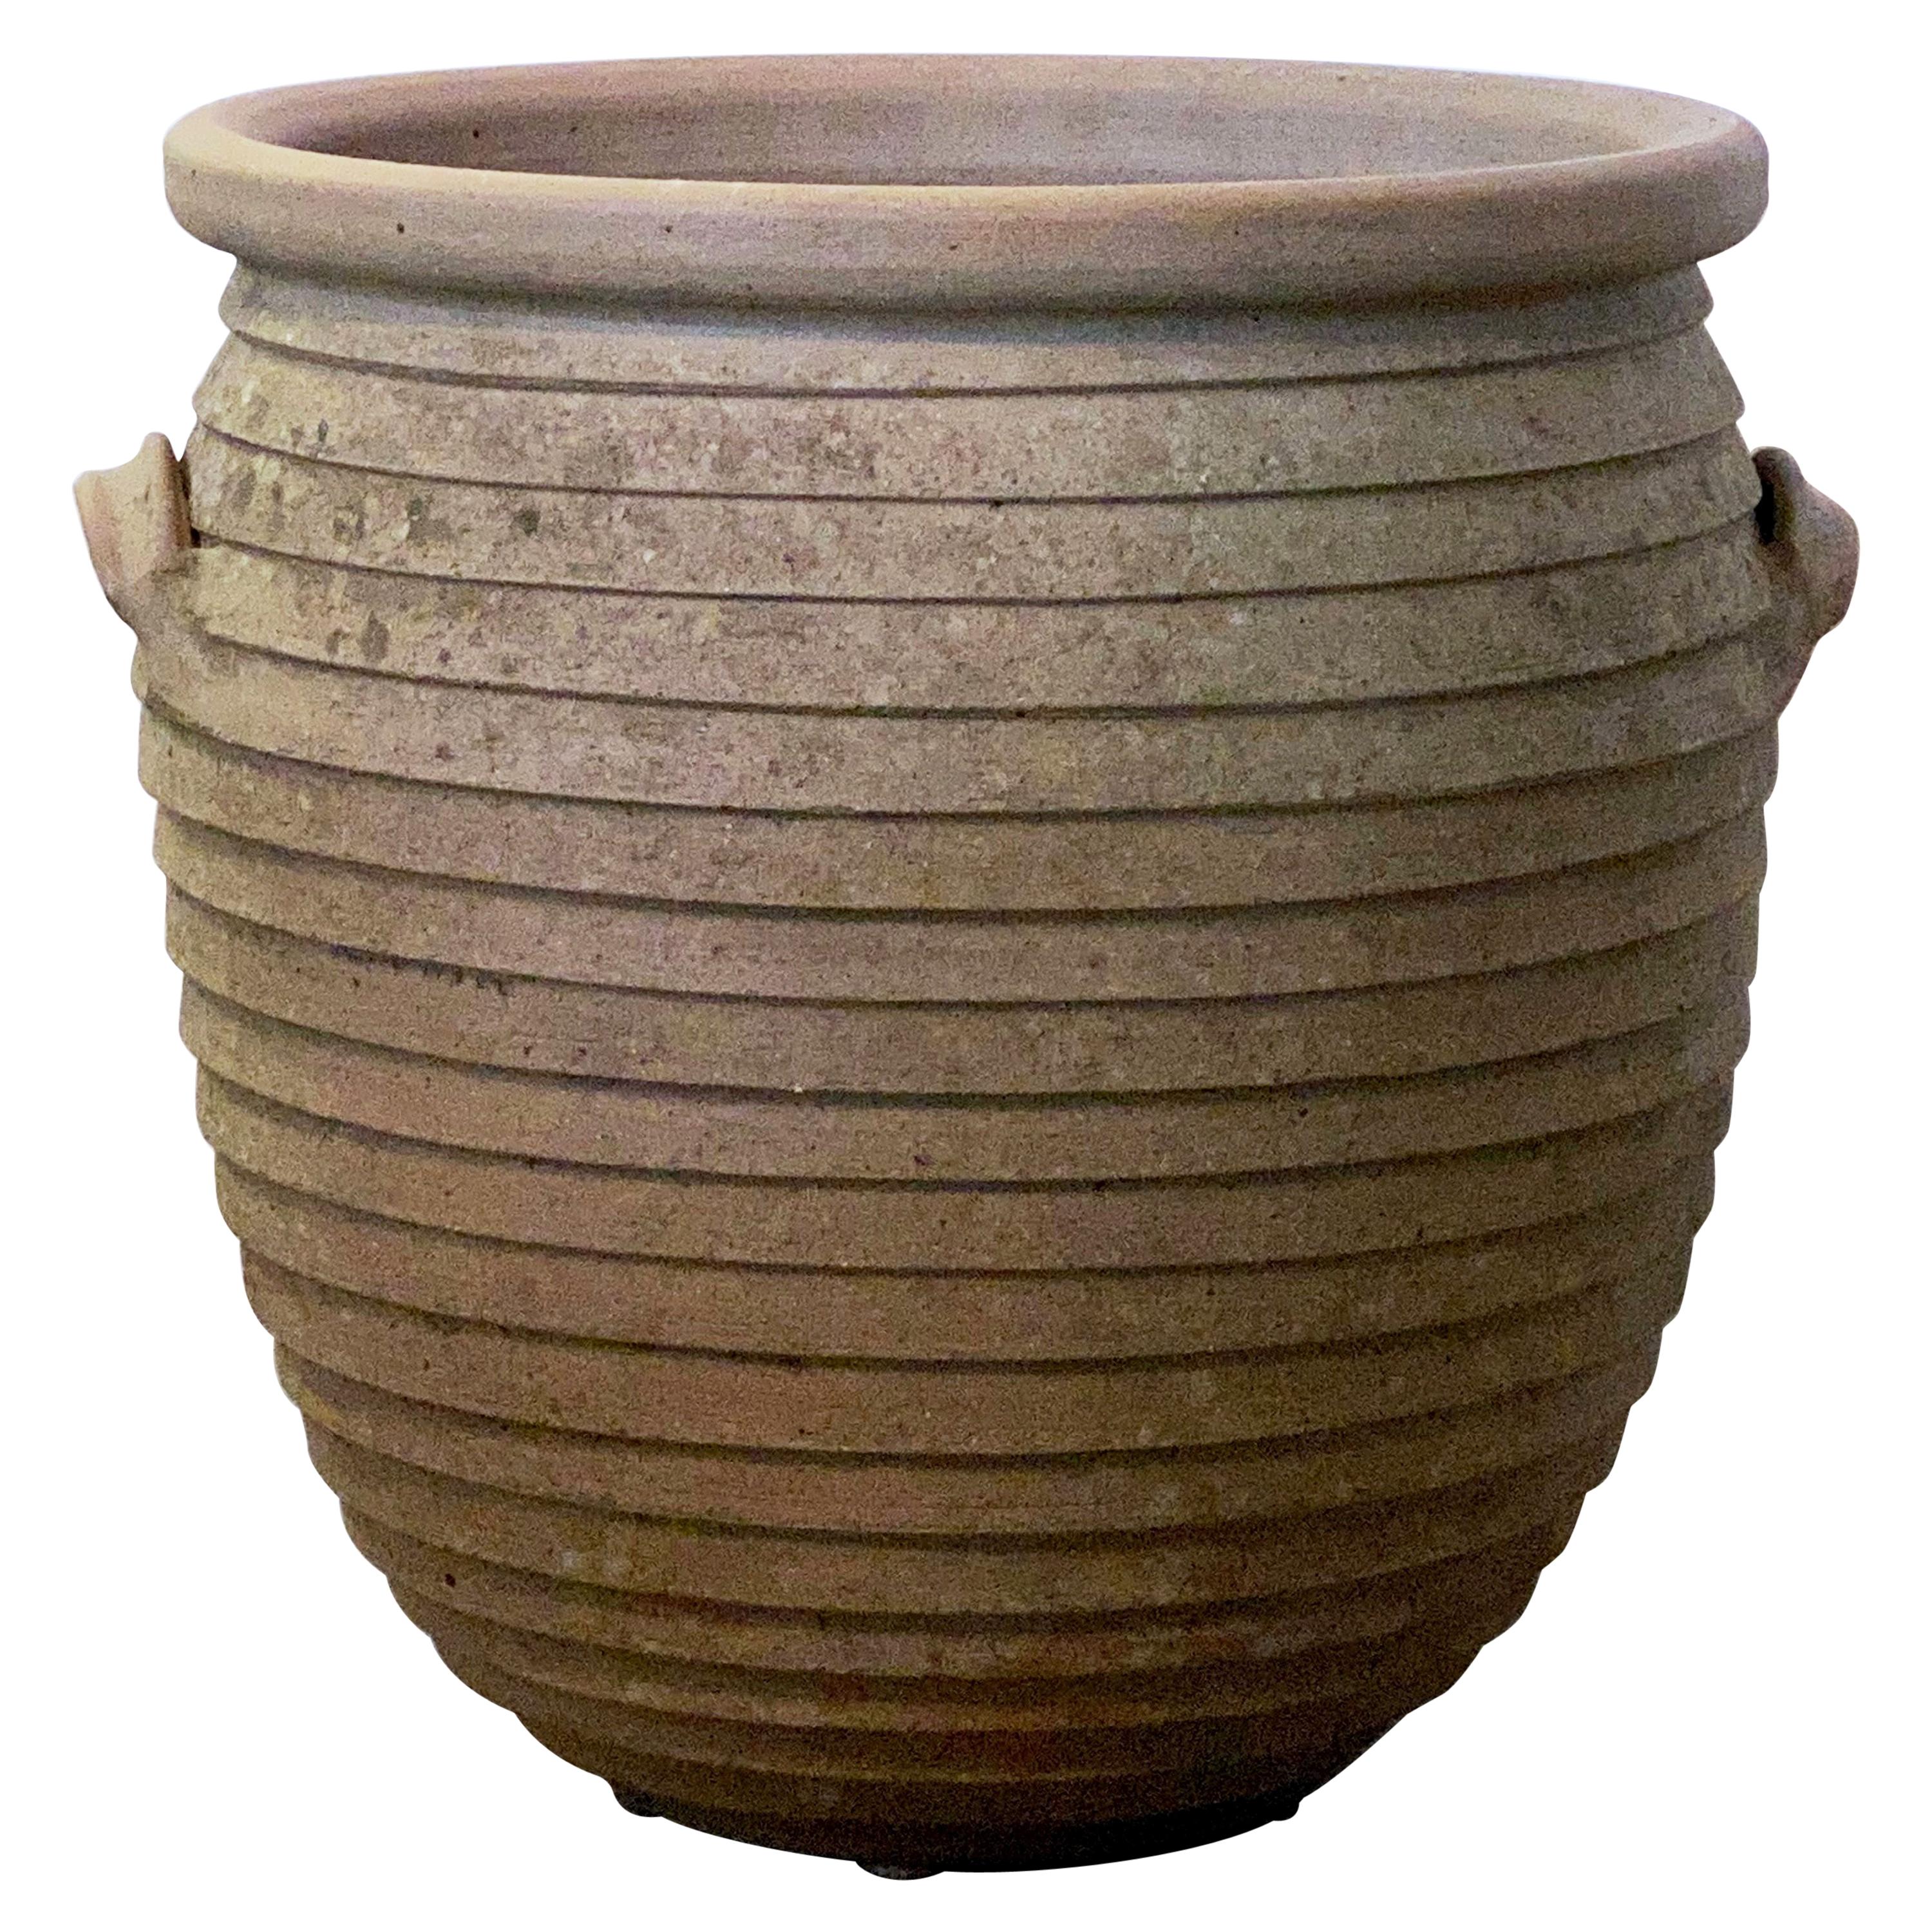 English Ribbed Terracotta Pot or Planter Jar for the Garden